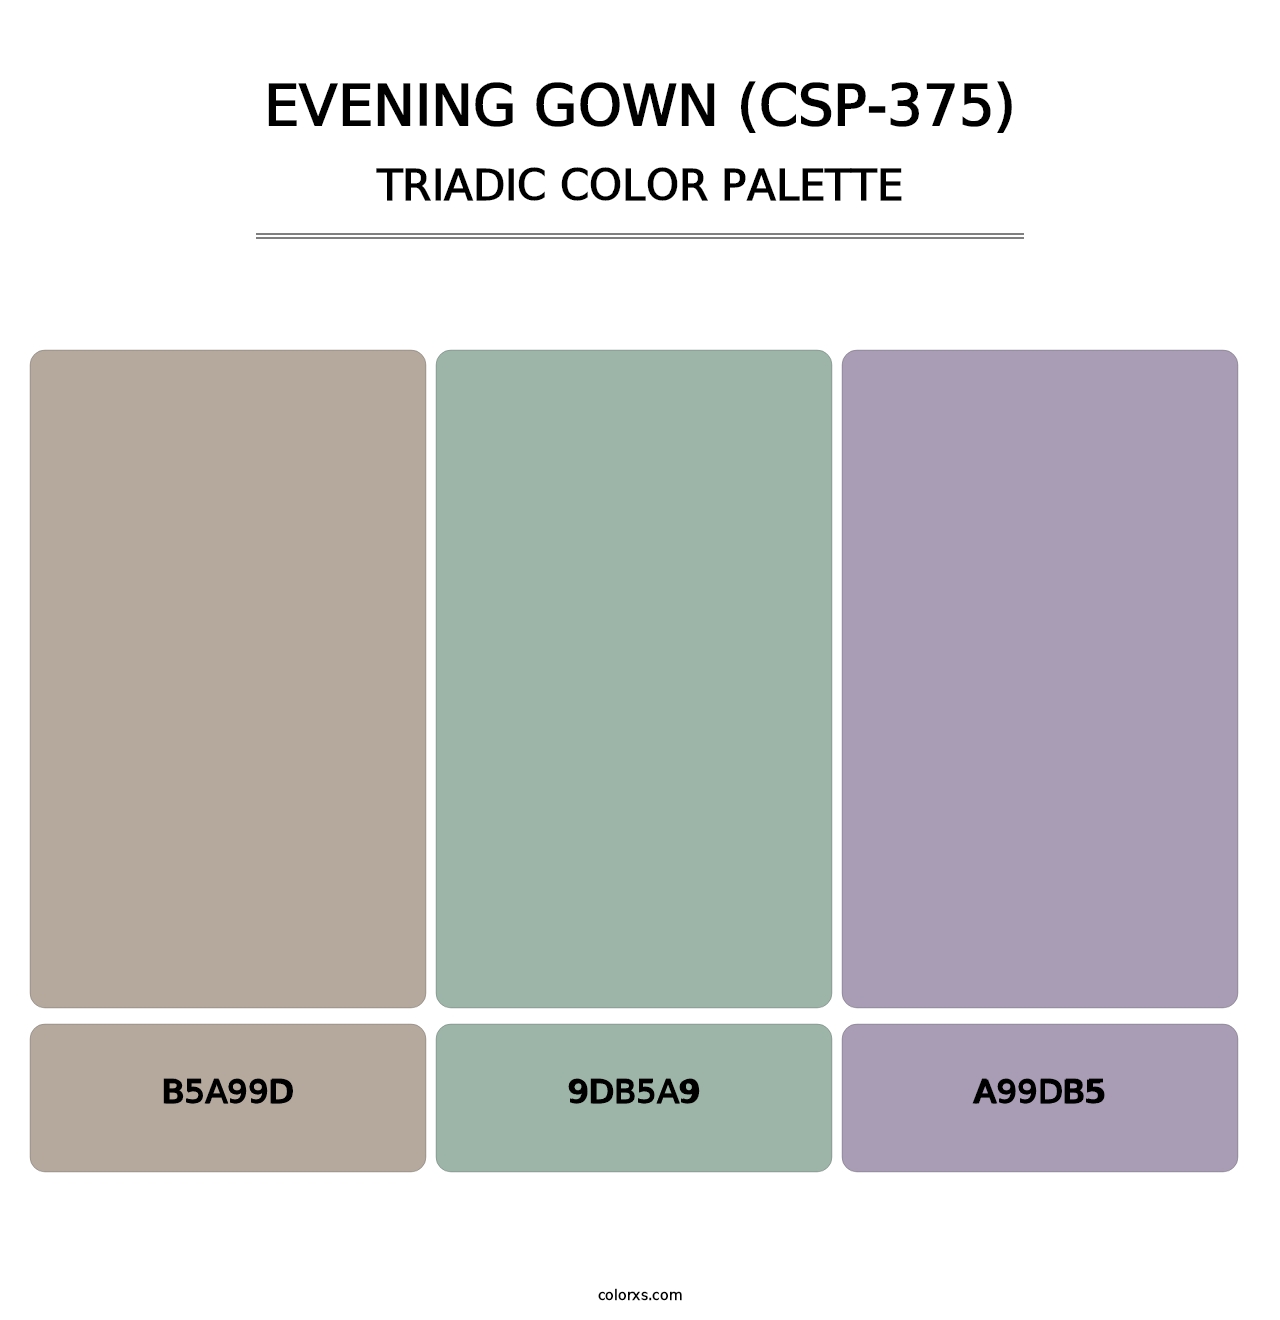 Evening Gown (CSP-375) - Triadic Color Palette